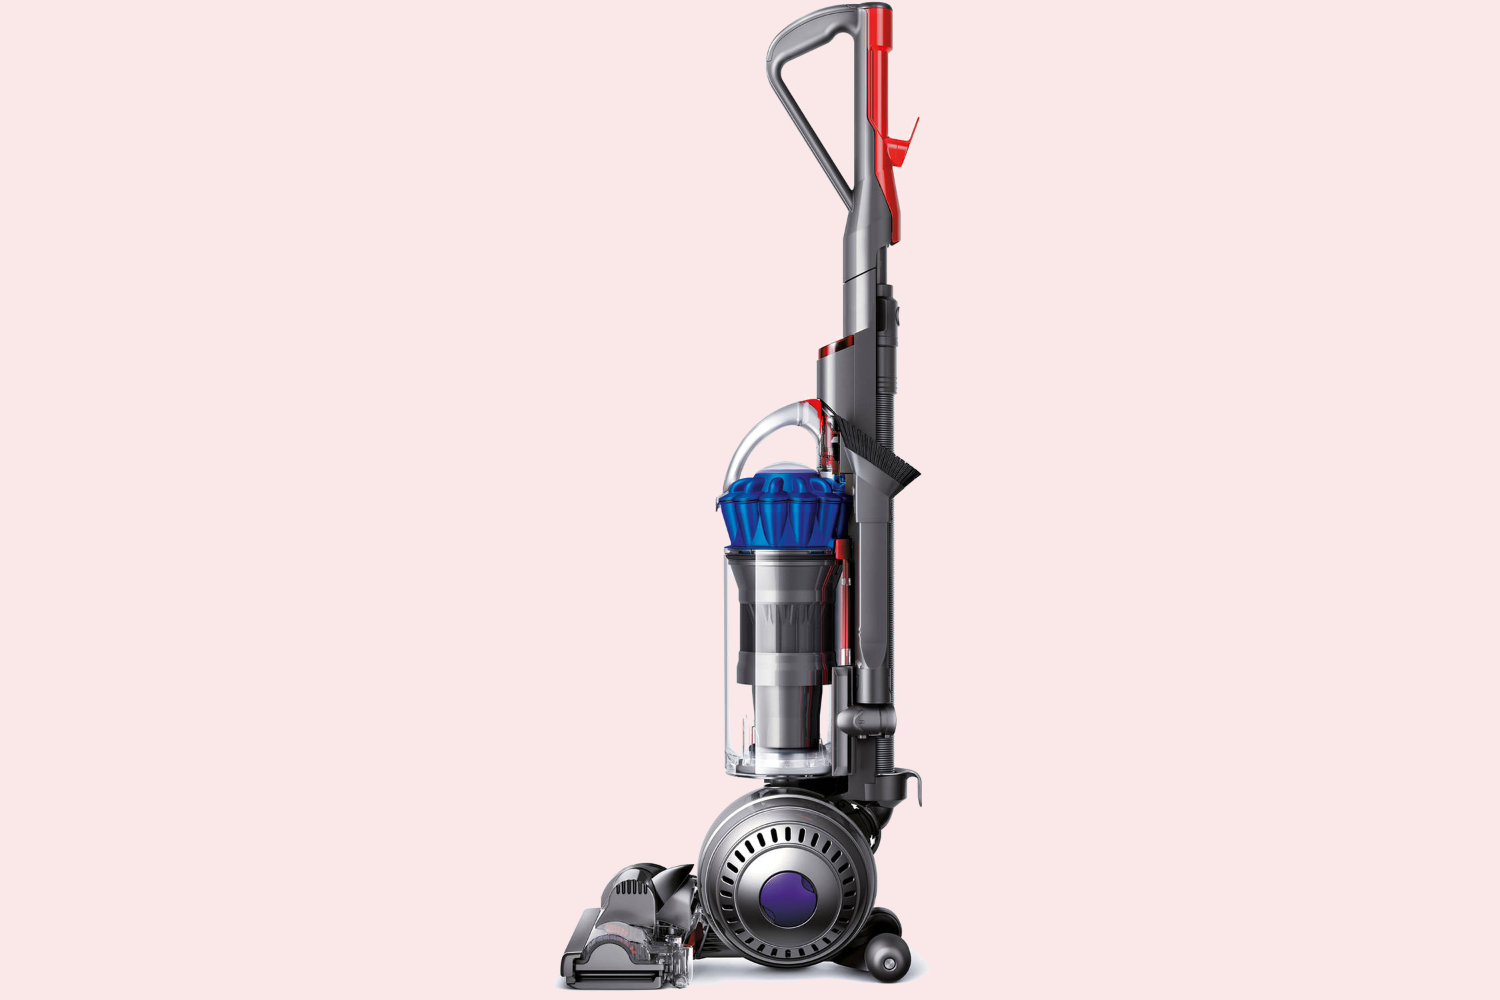 walmart slashes prices on dyson ball multi floor upright vacuums post prime day light multifloor bagless vacuum 1